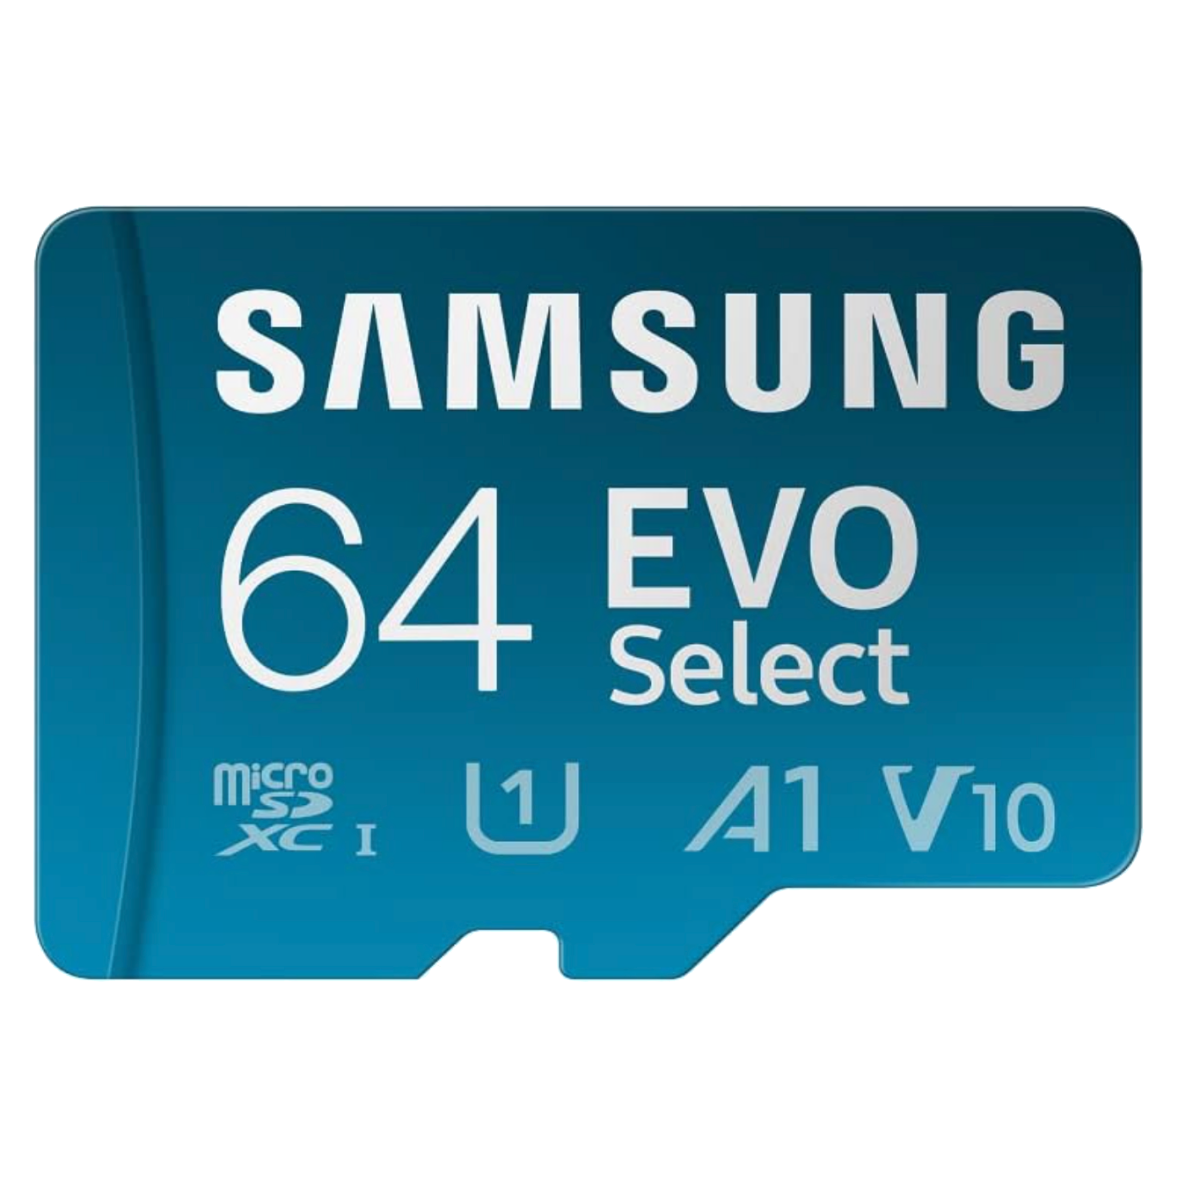 A Samsung Evo Select UHS-I microSDXC card